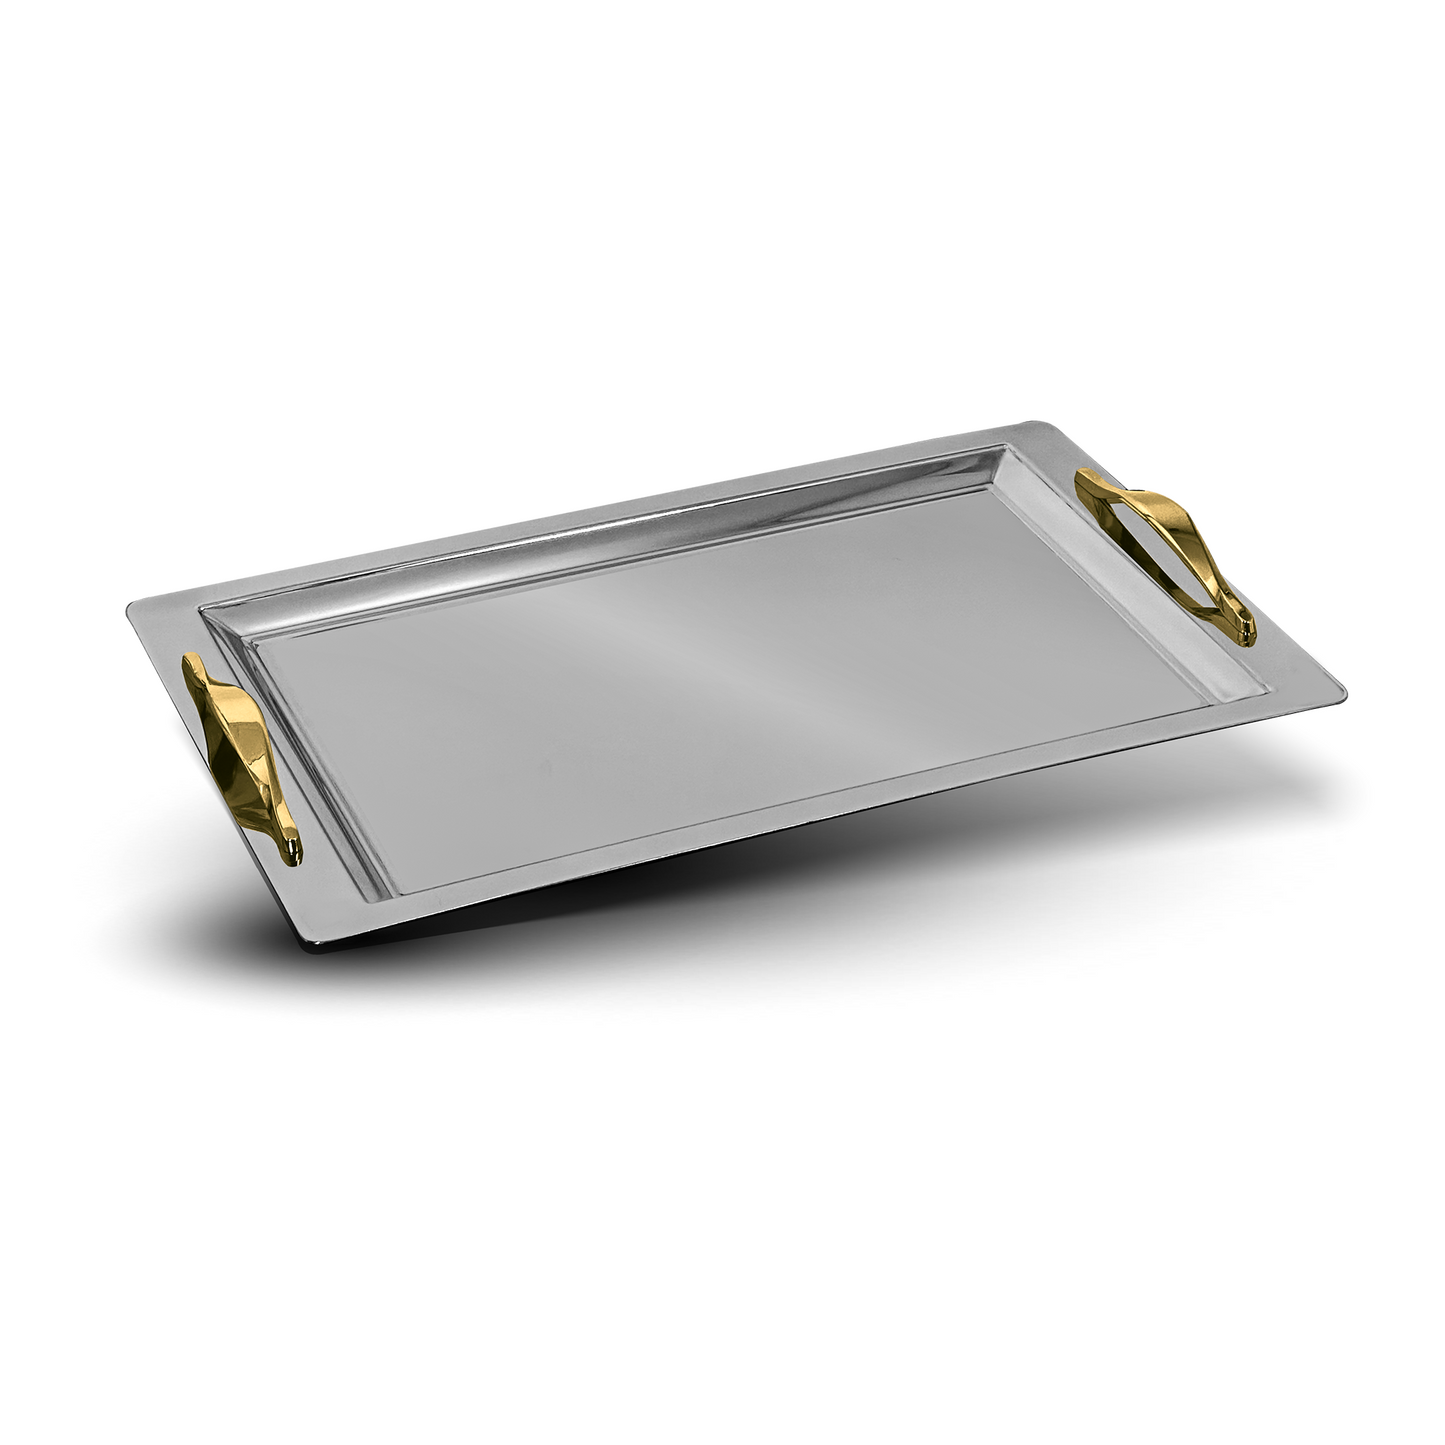 Dorsch Wave Silver Serving Tray - Gold Handles